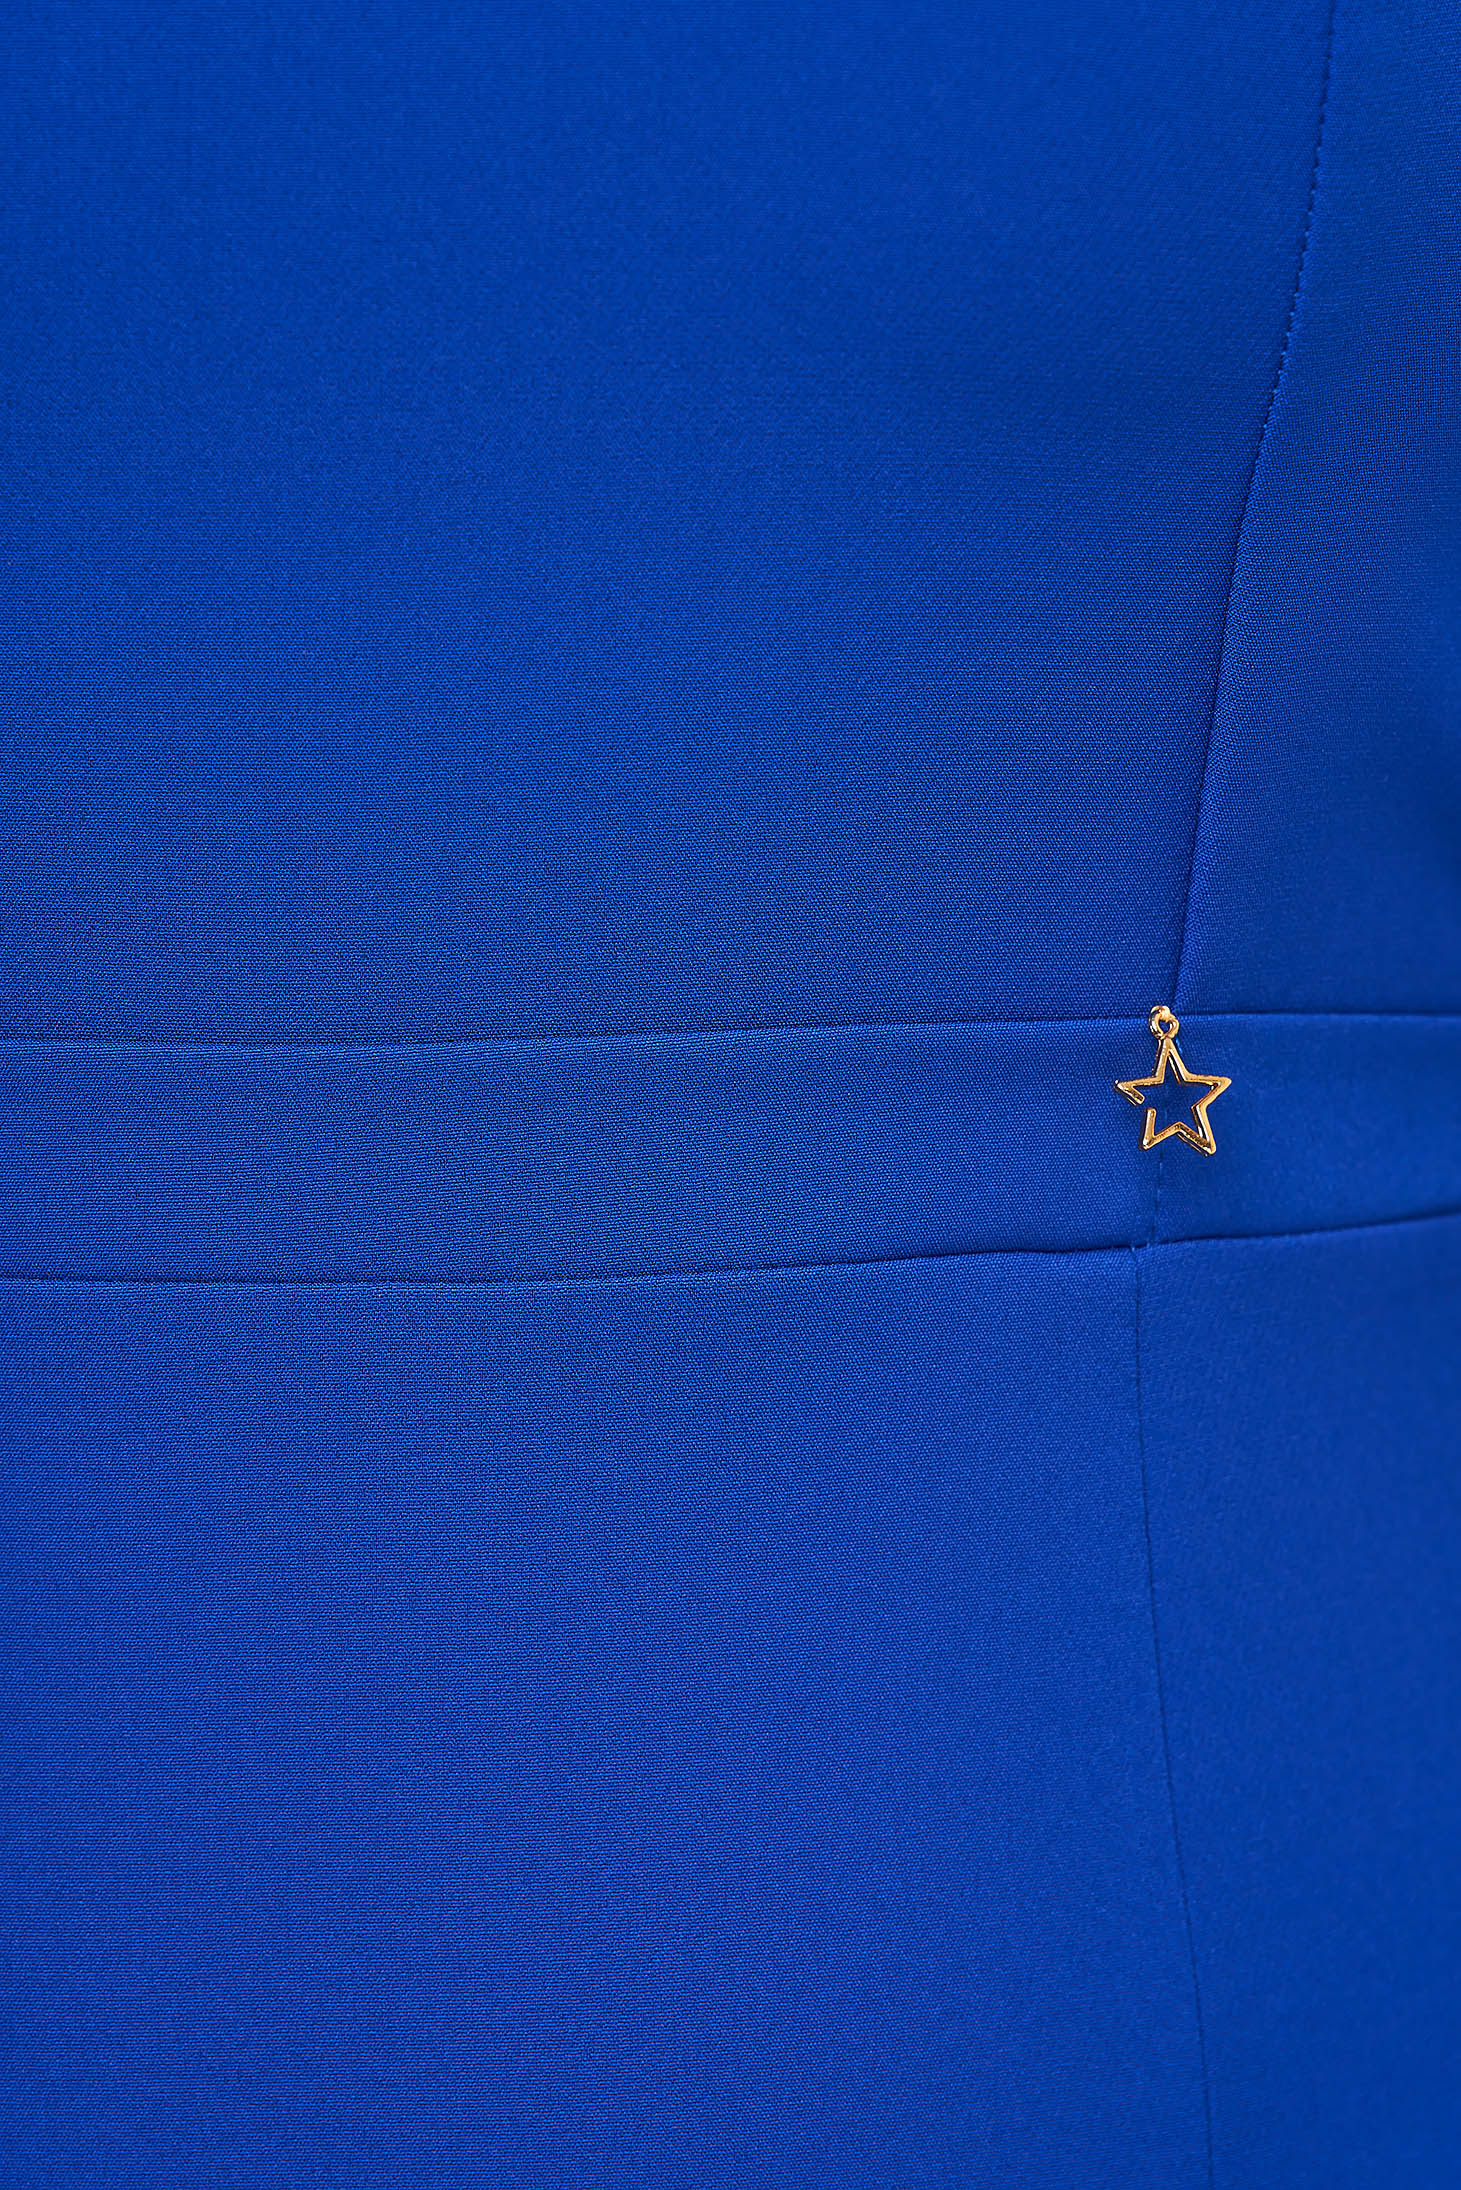 Rochie din stofa elastica albastra midi tip creion cu umeri cu volum si volanas la baza - StarShinerS 6 - StarShinerS.ro